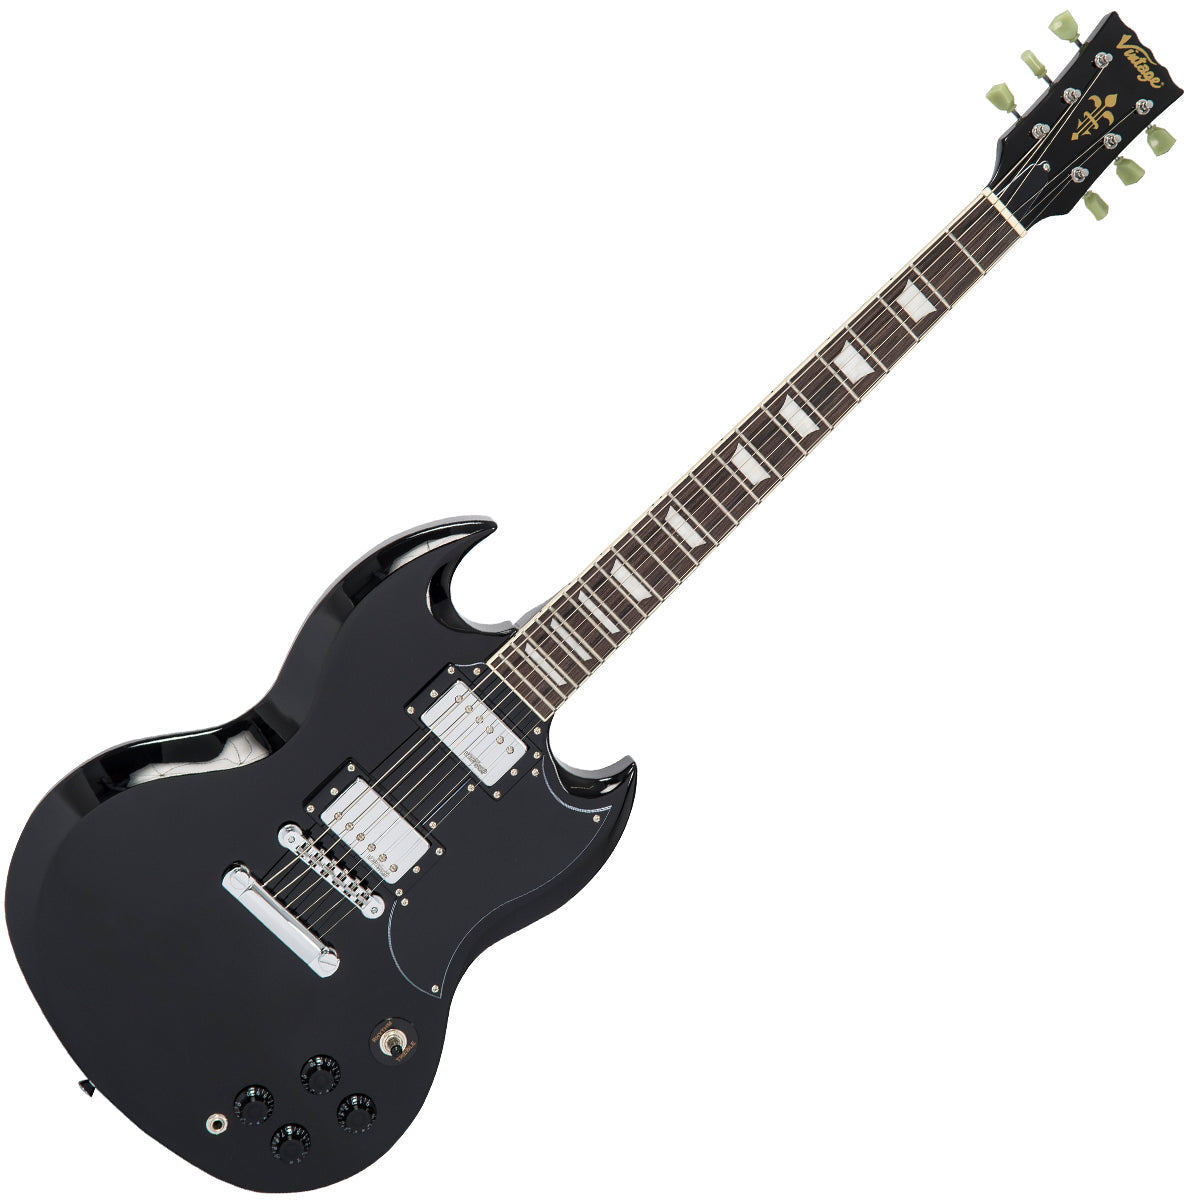 Vintage VS6 ReIssued Electric Guitar ~ Boulevard Black, Electric Guitar for sale at Richards Guitars.